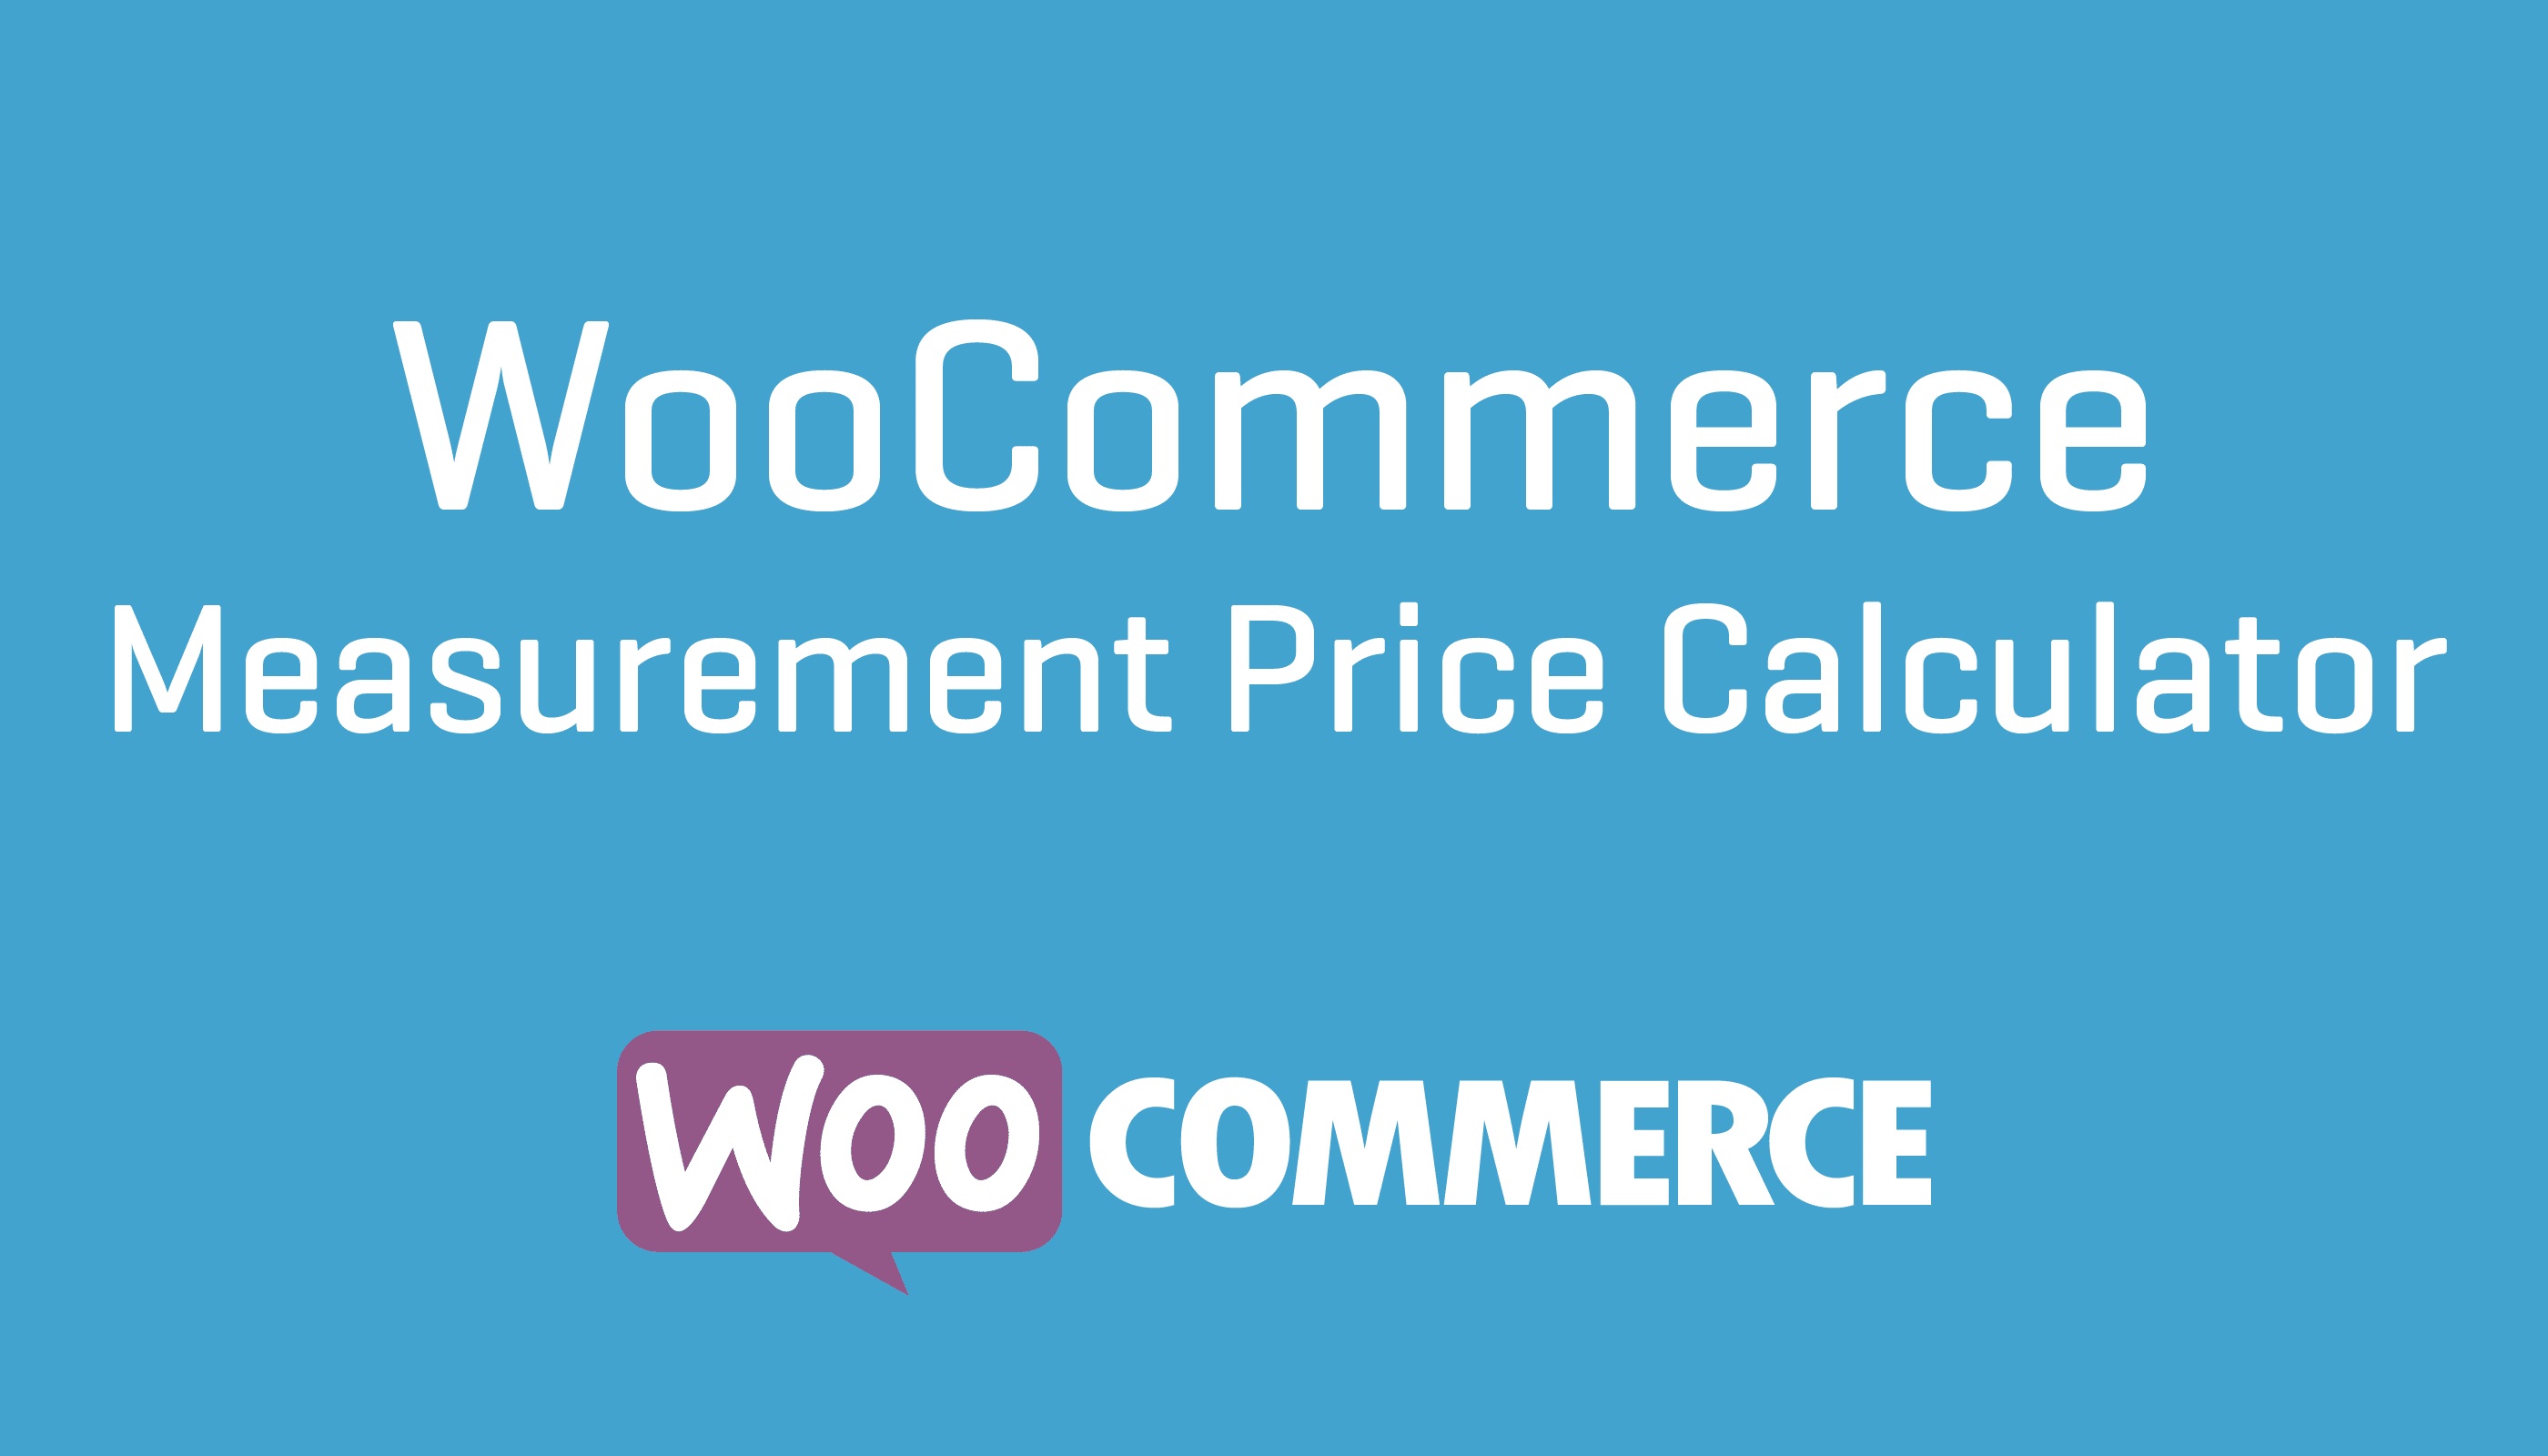 ooCommerce Measurement Price Calculator